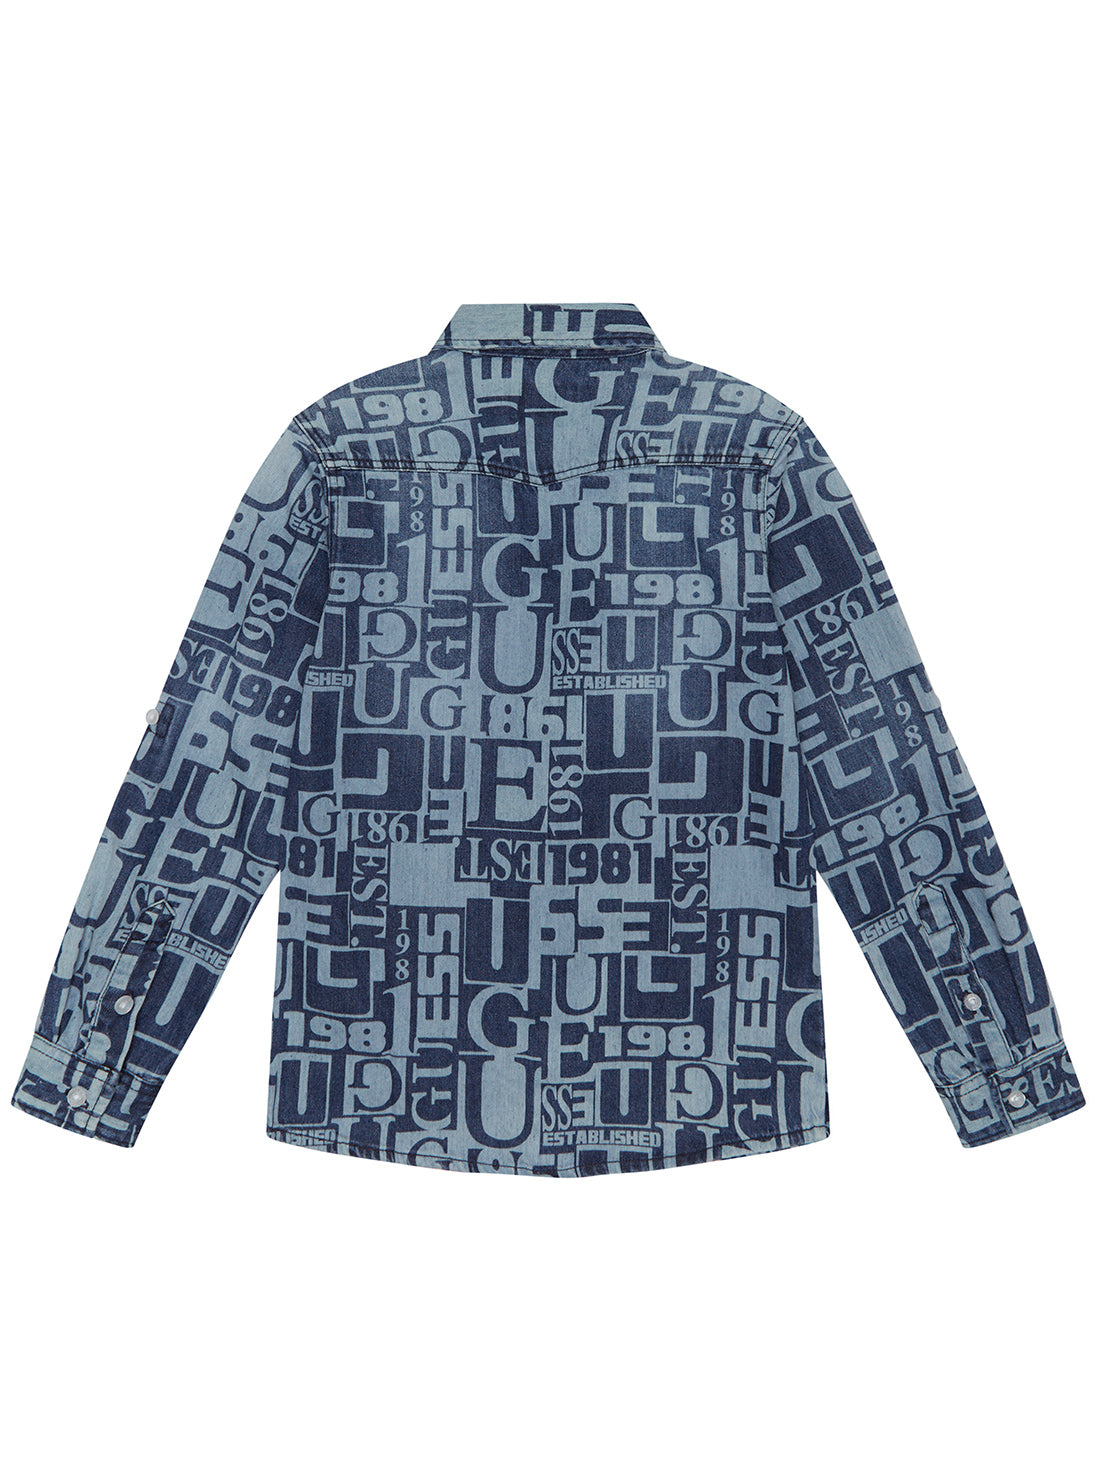 GUESS Blue Logo Long Sleeve Shirt (2-7) back view